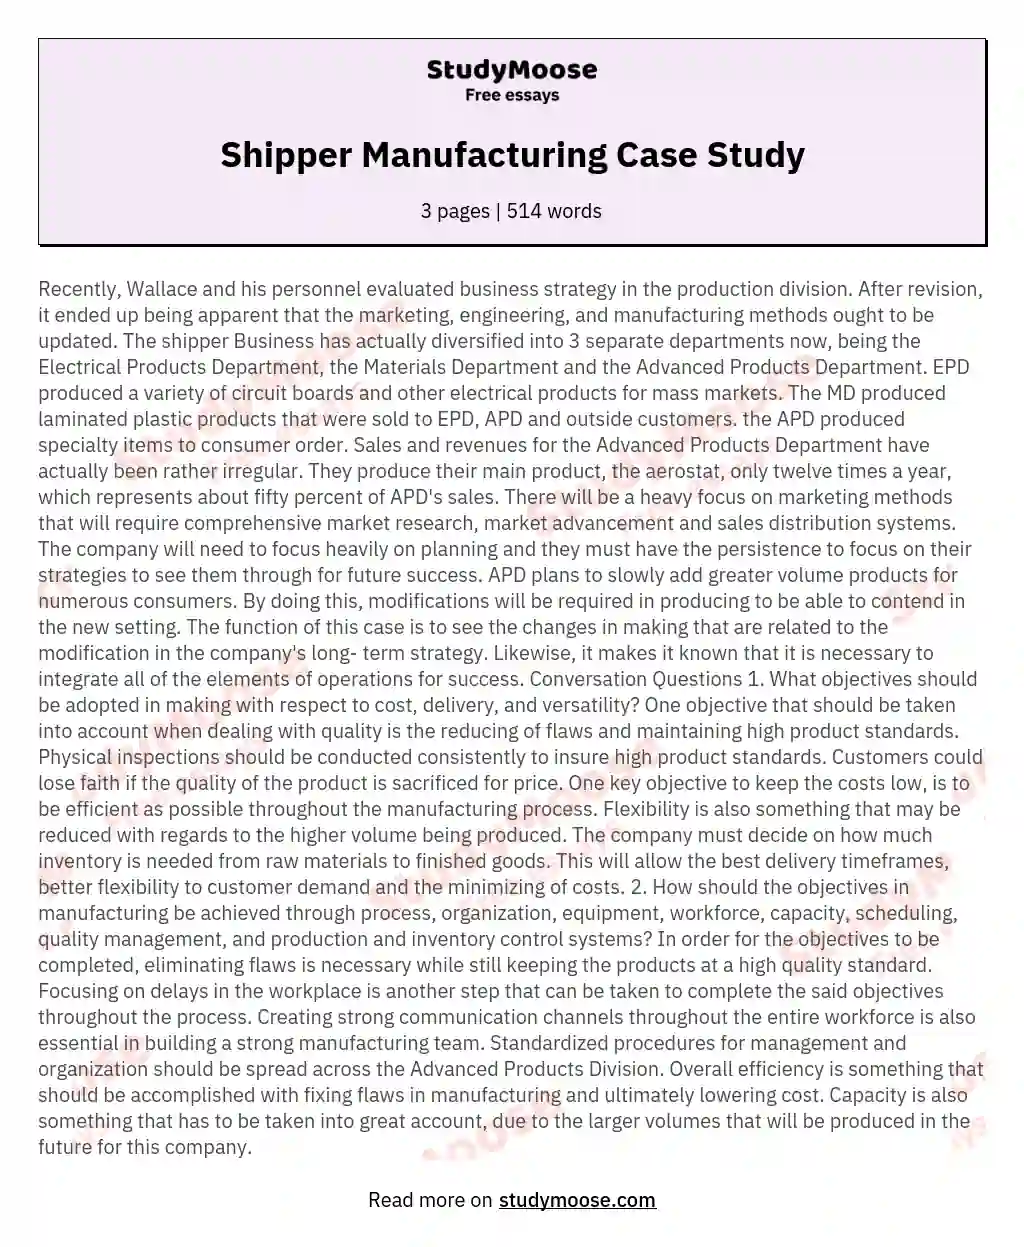 Shipper Manufacturing Case Study essay